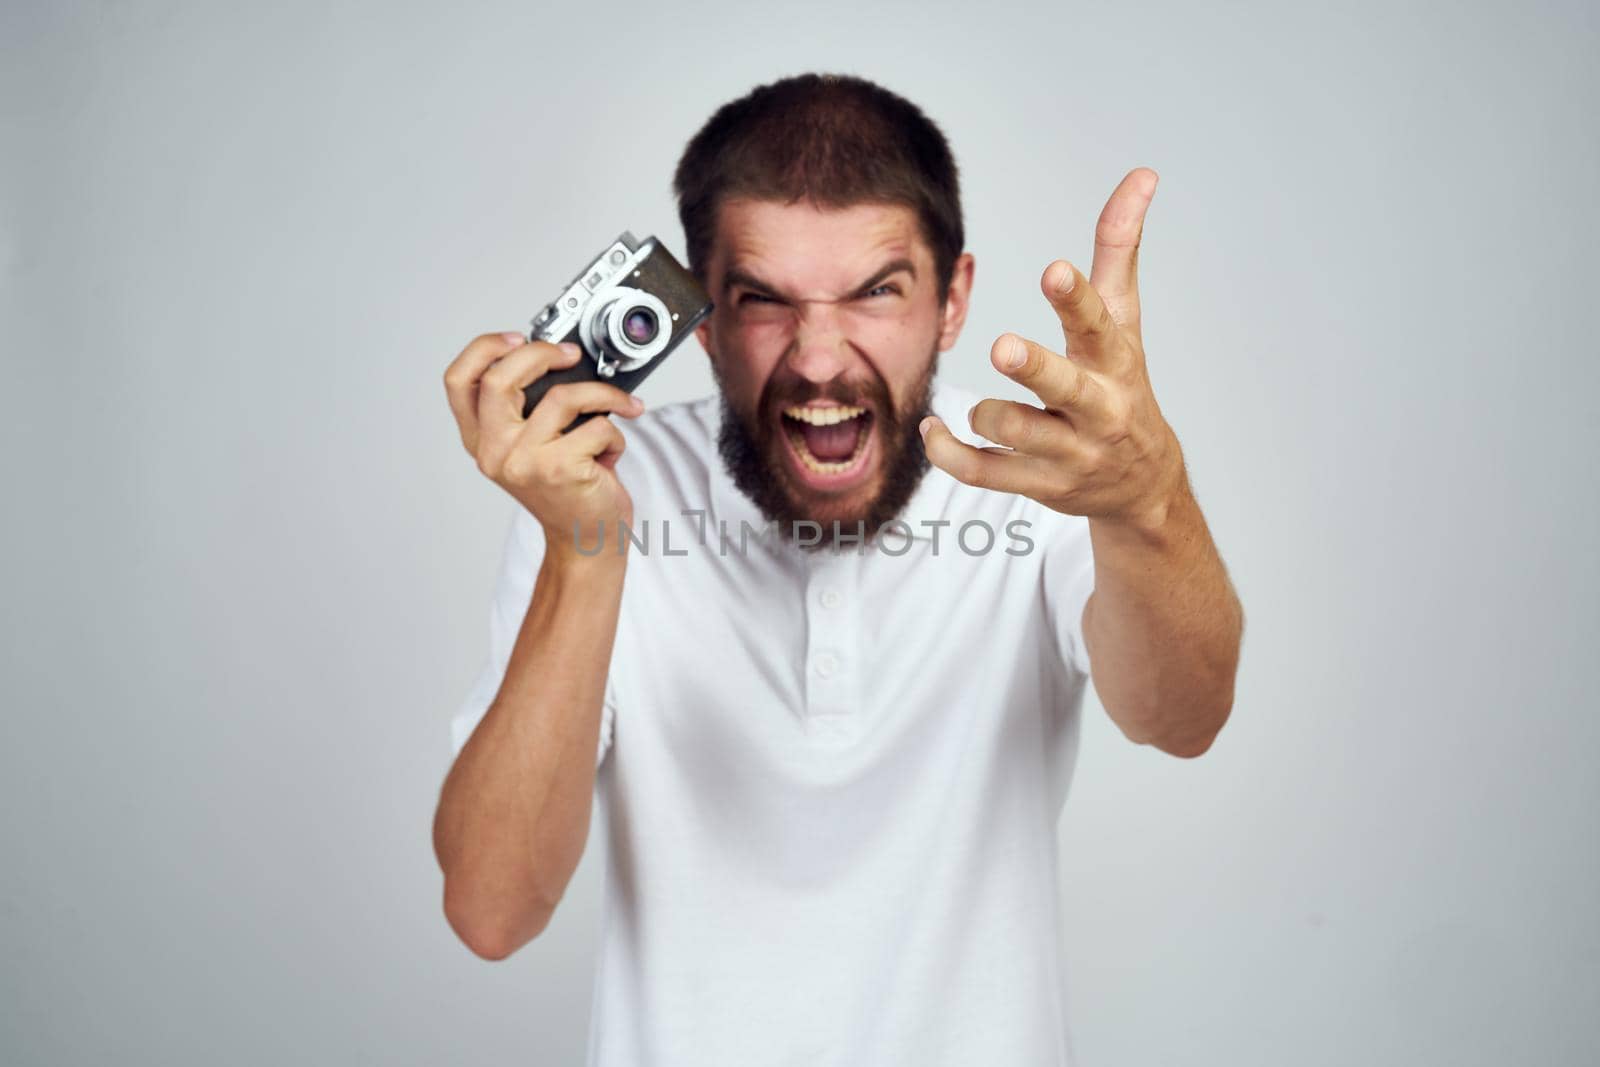 man holding camera professional photographer home light background. High quality photo